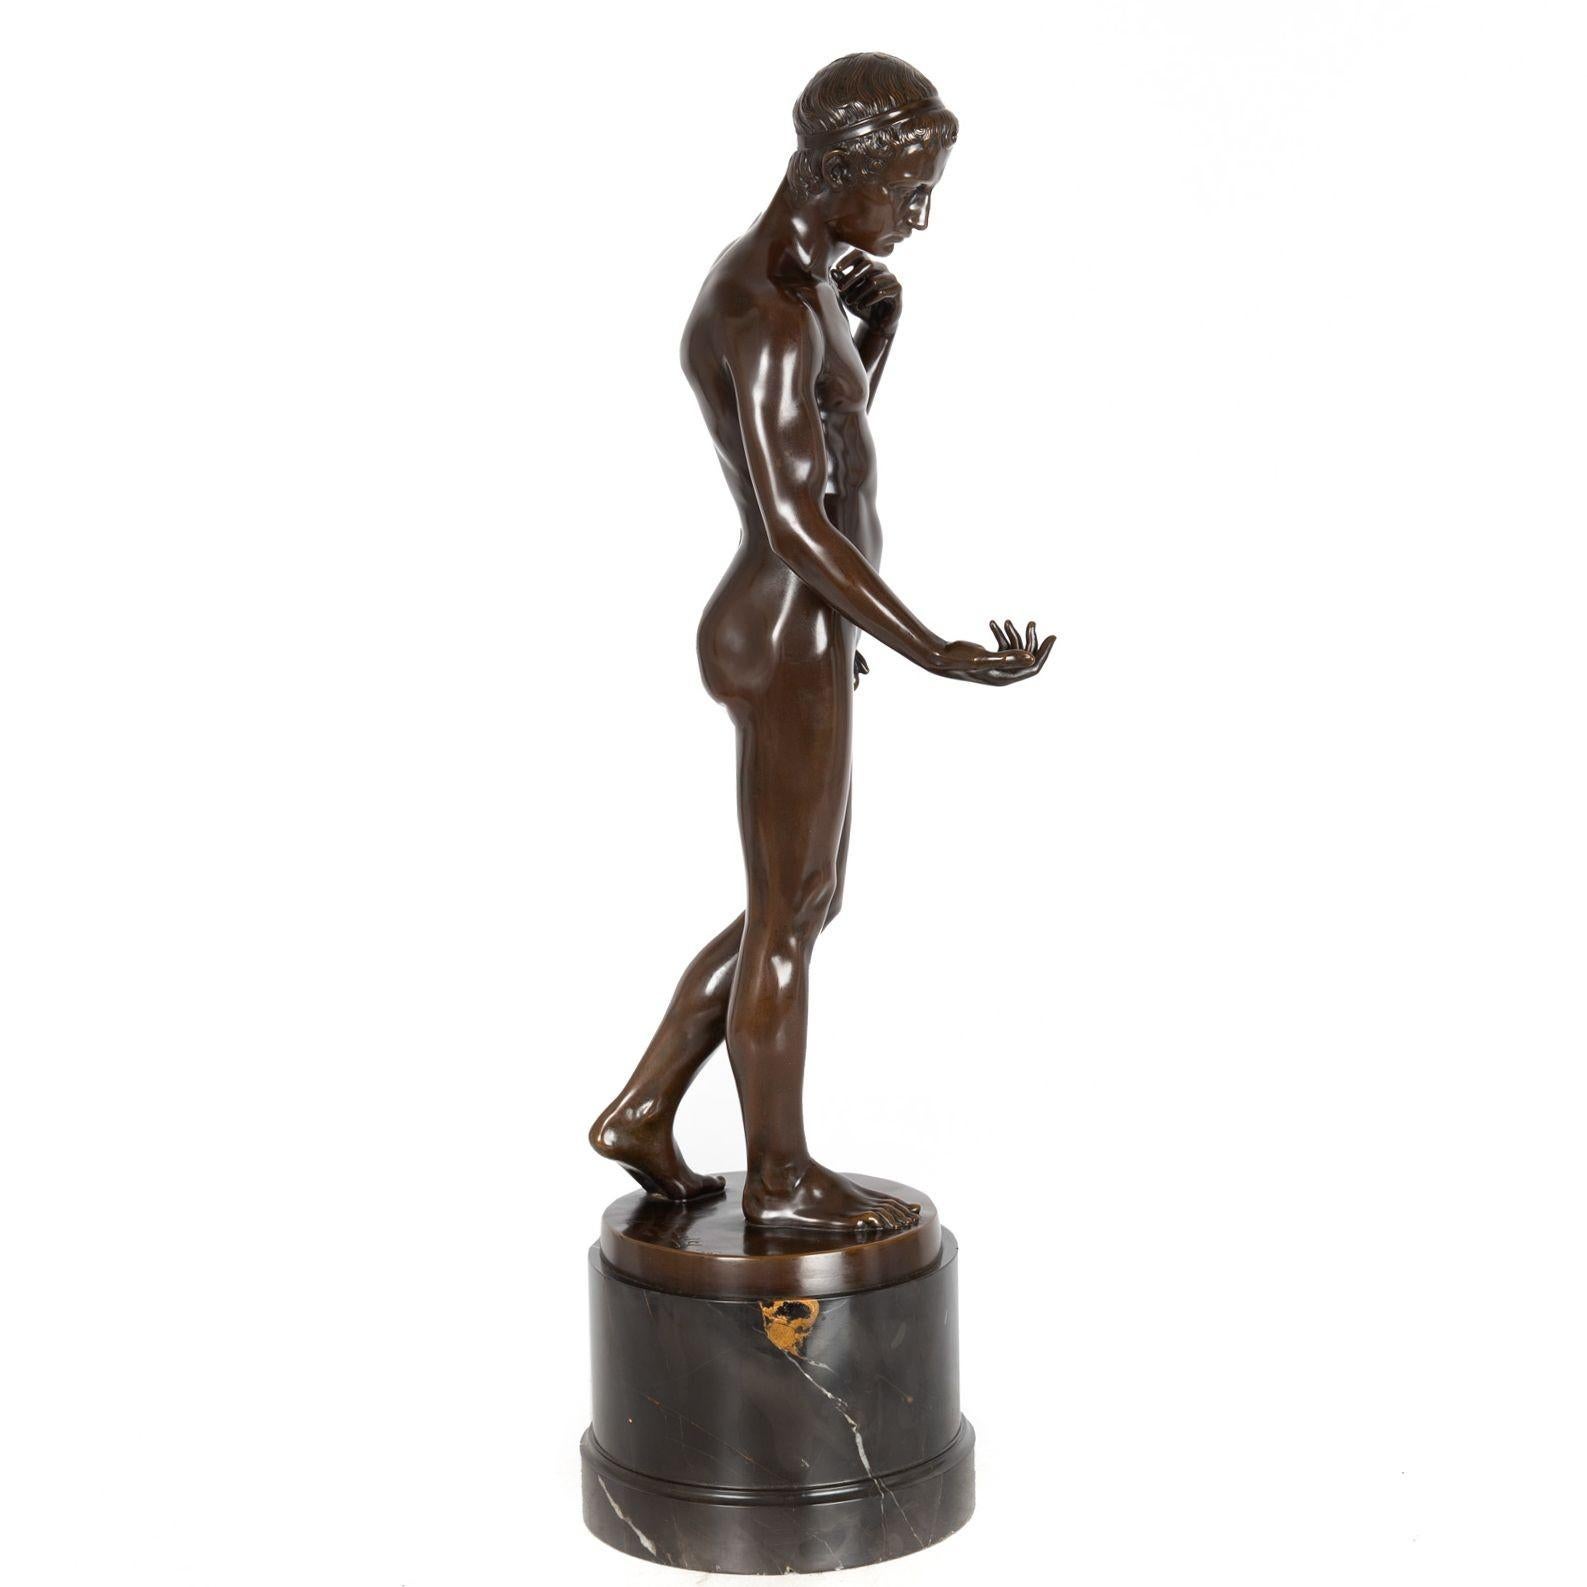 Art Nouveau Rare Antique Bronze Sculpture of “Adam” (1911) by Charles Samuel